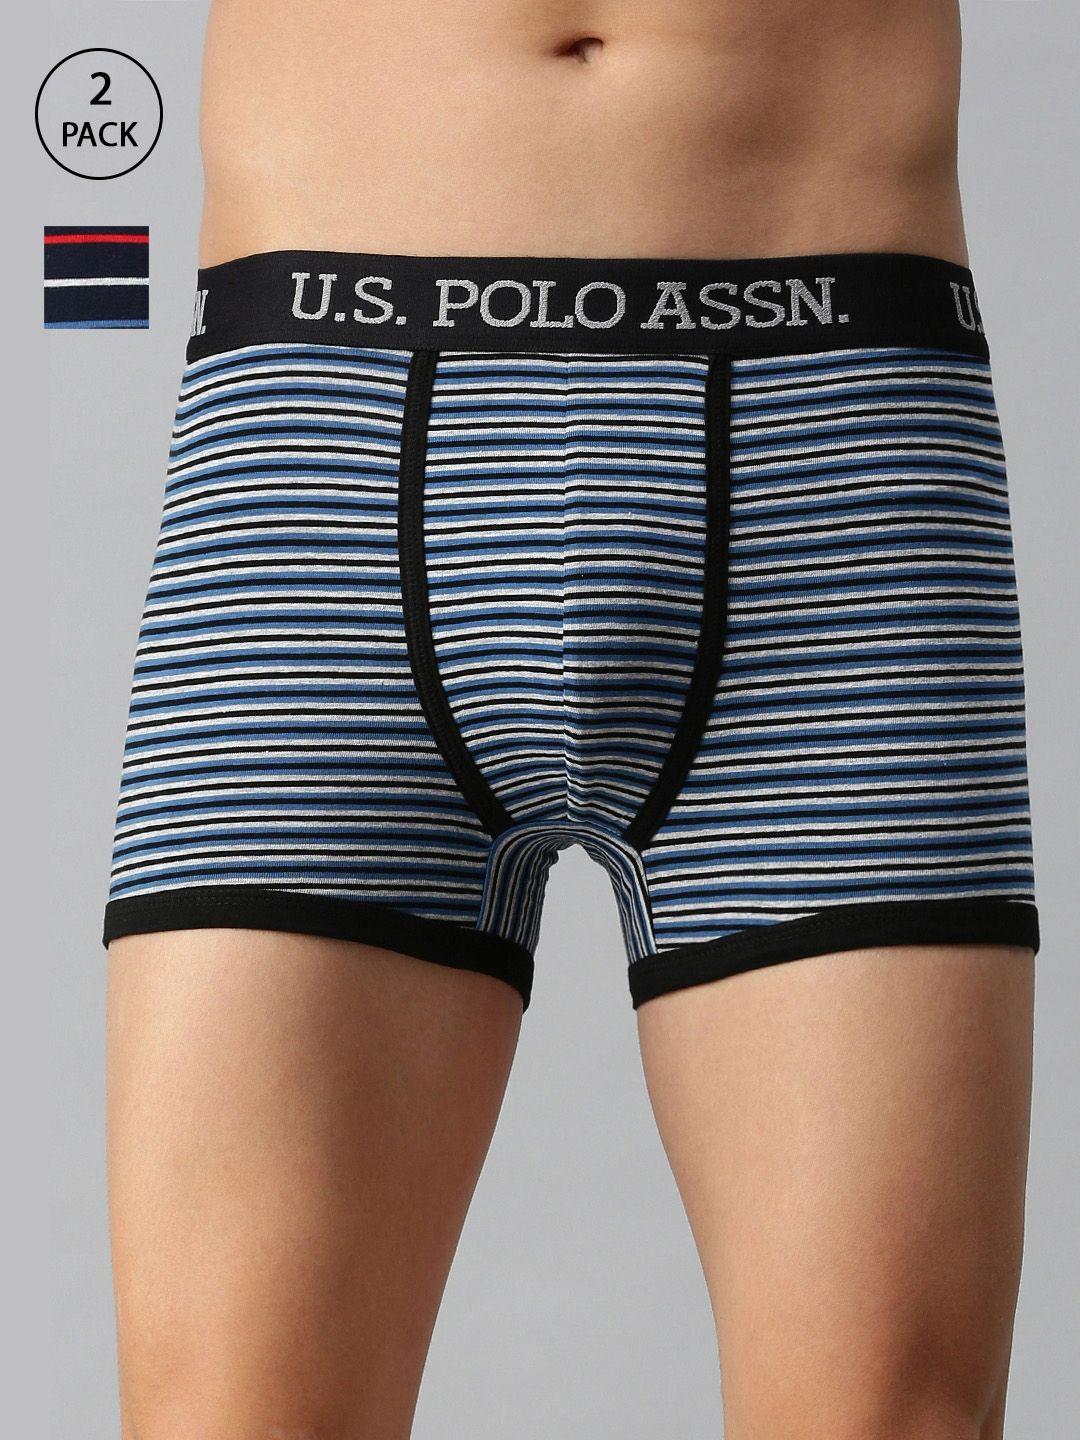 u.s.-polo-assn.-men-pack-of-2-assorted-striped-trunks-i004-gr0-p2